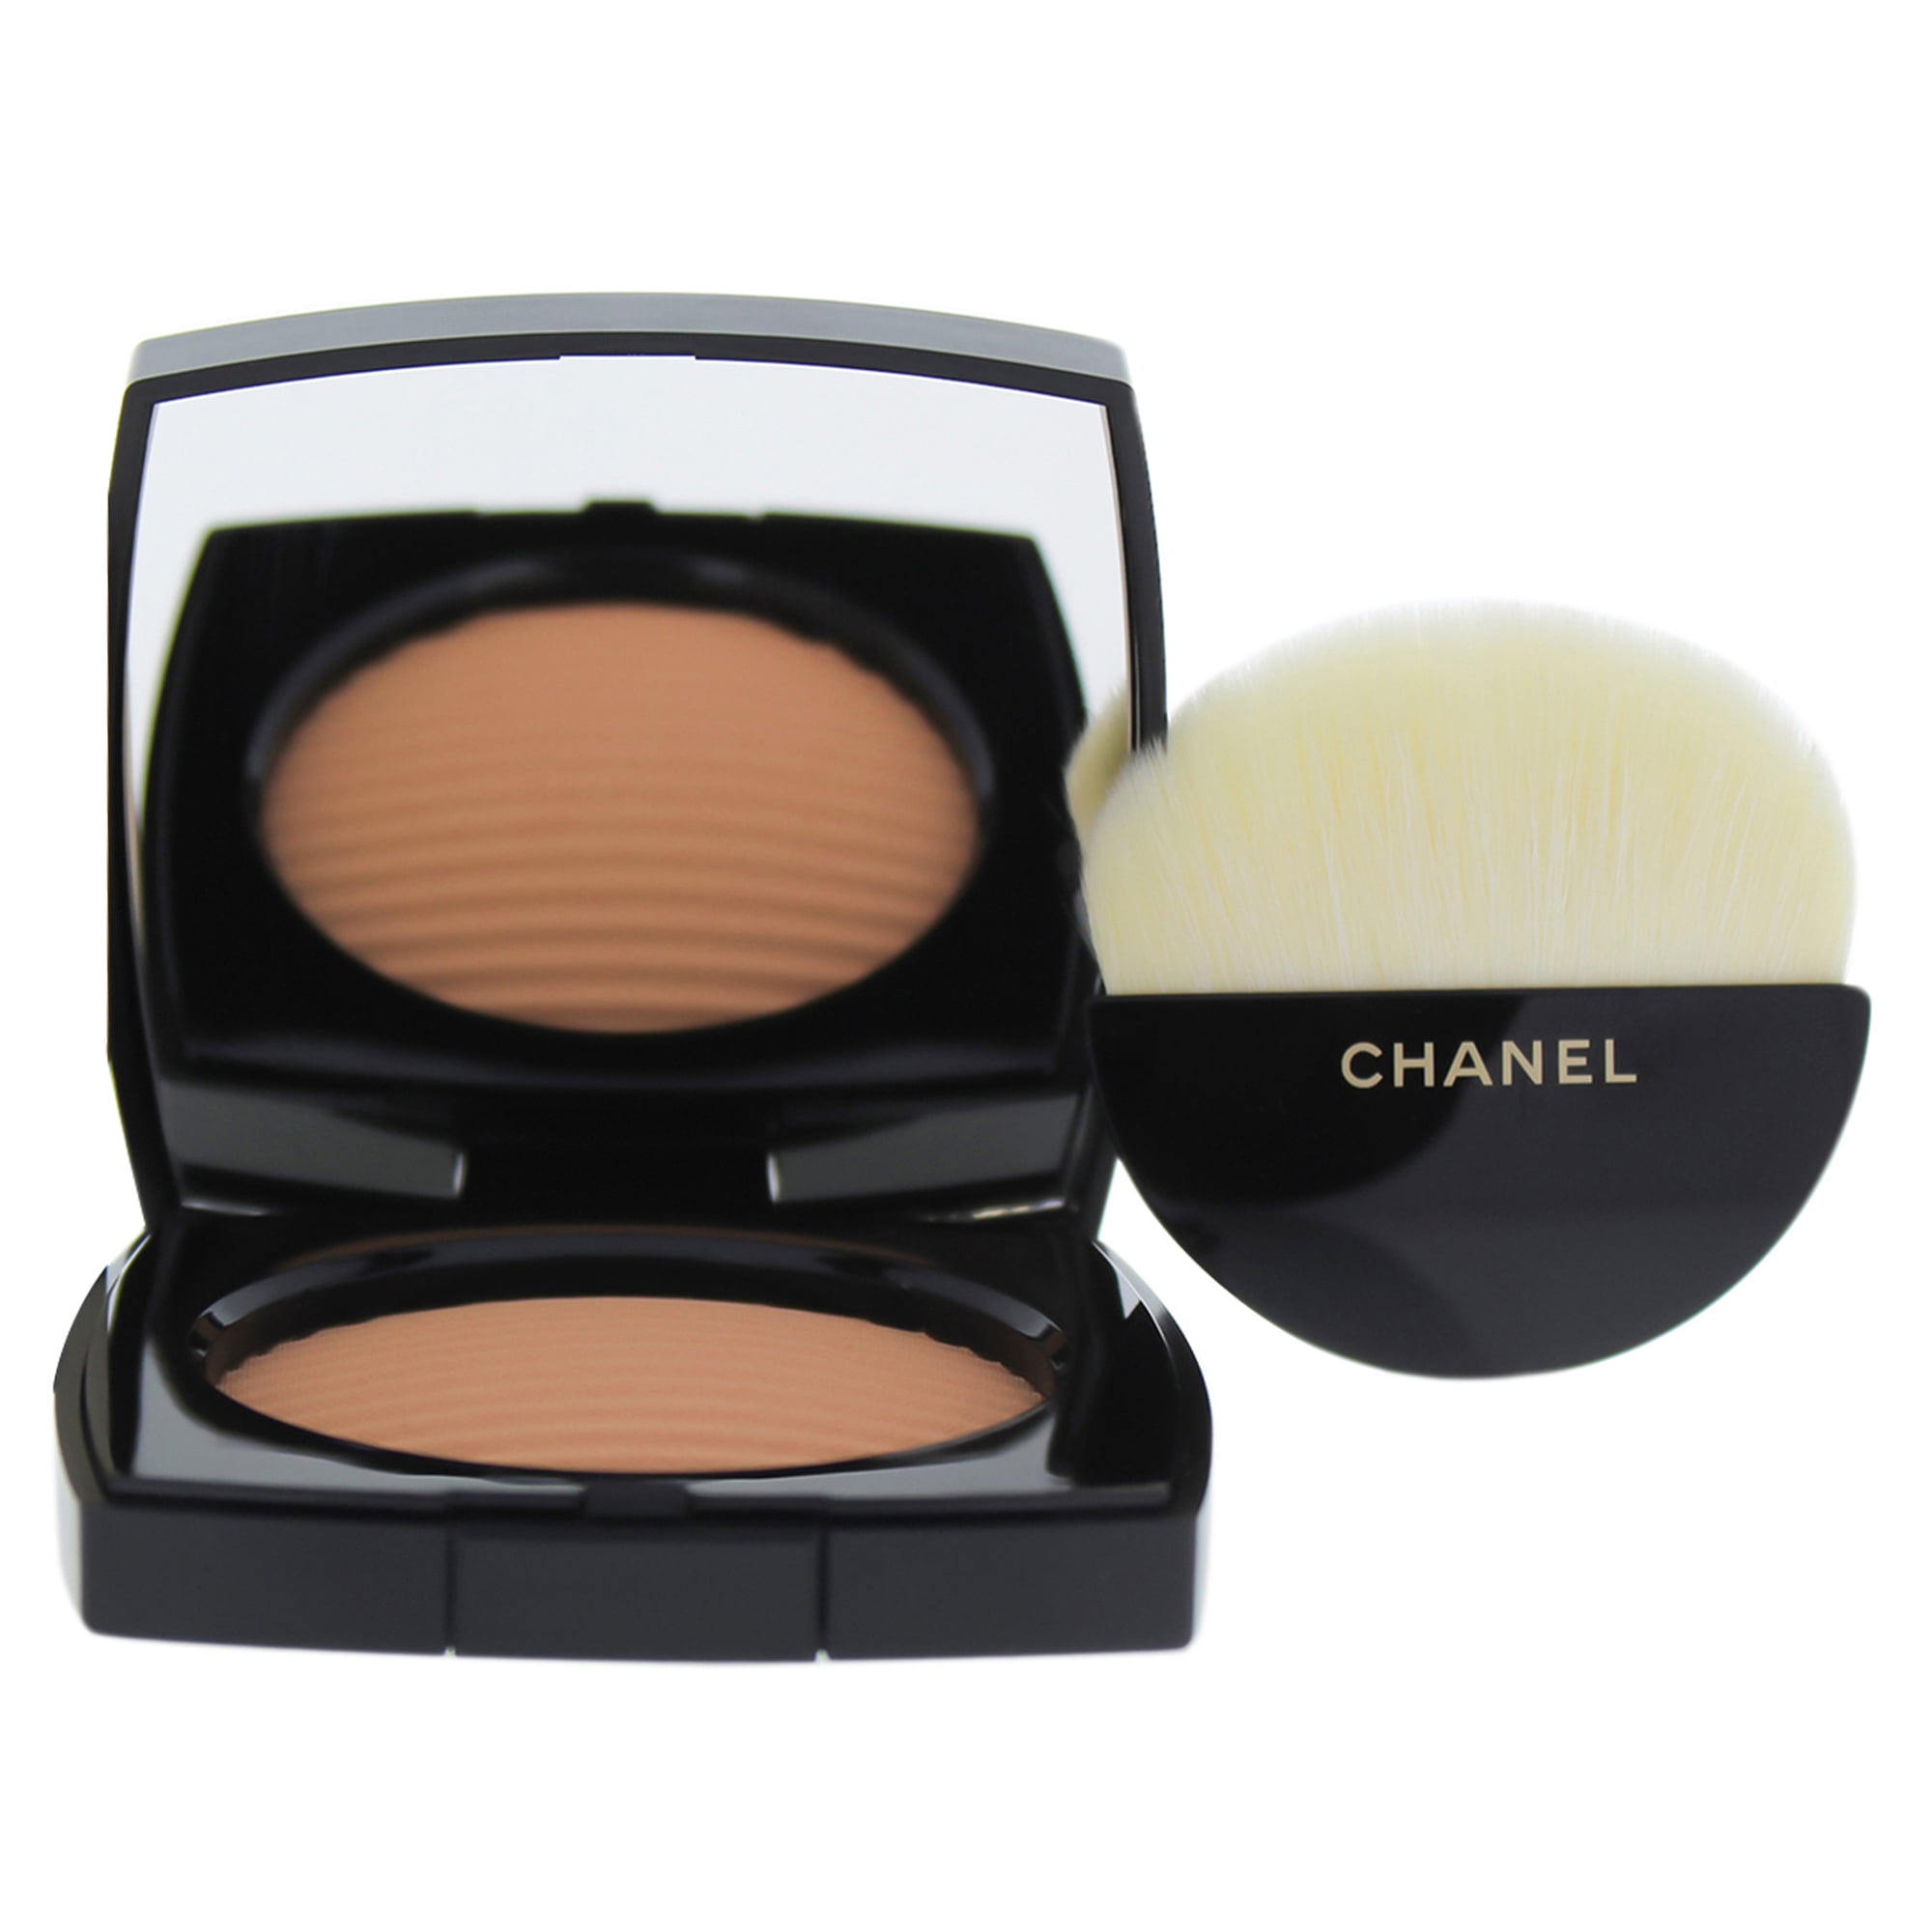 Les Beiges Healthy Glow Luminous Colour - Medium Light by Chanel for Women  - 0.4 oz Bronzer